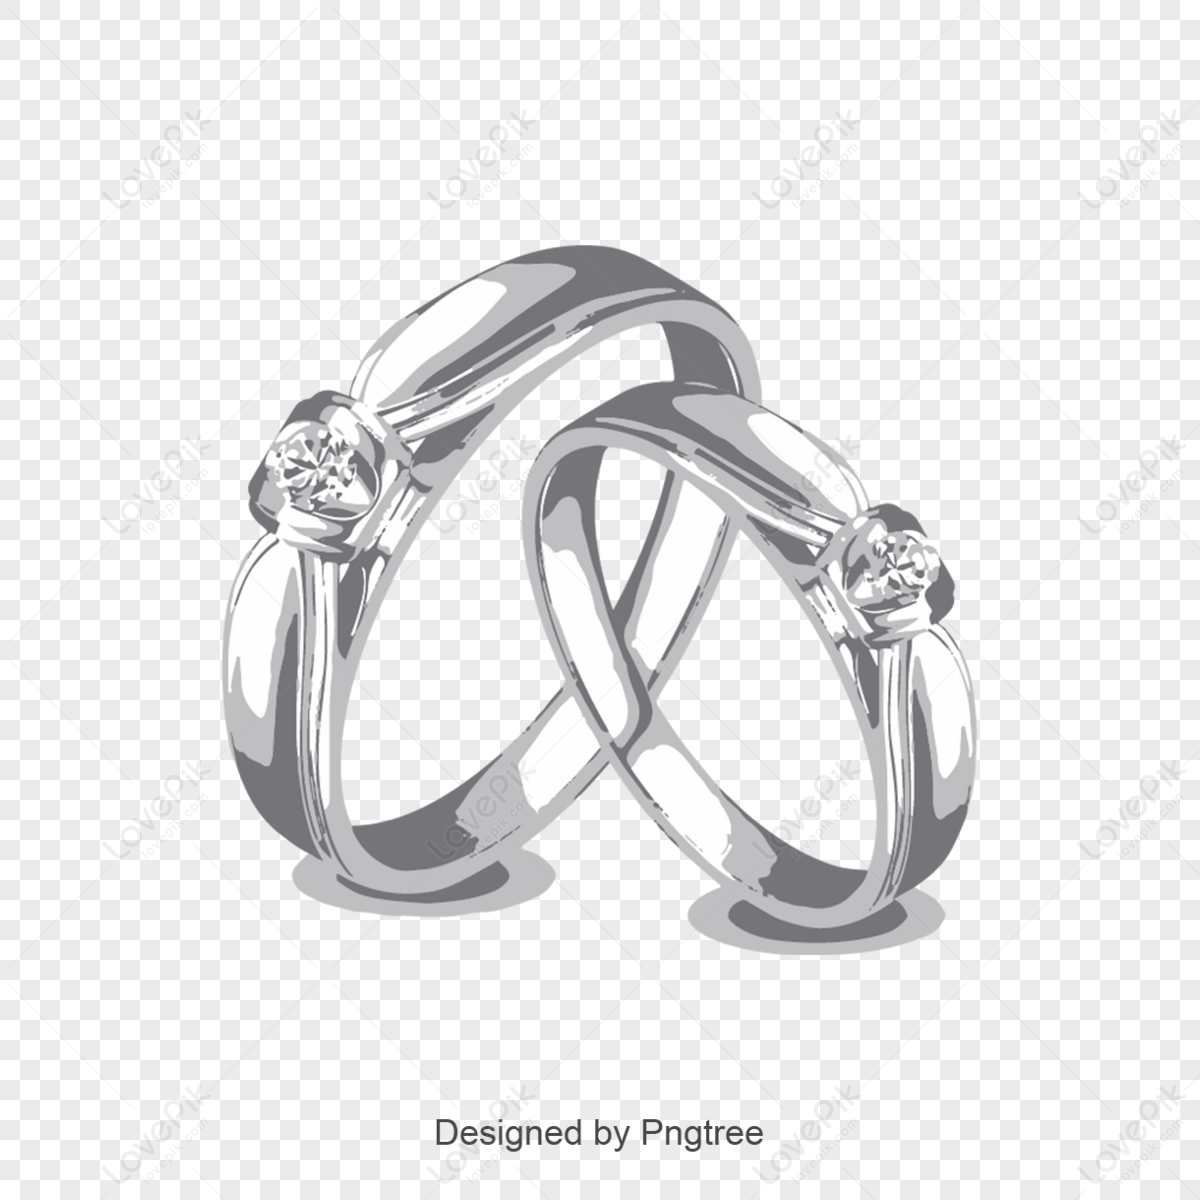 Wedding rings png Vectors & Illustrations for Free Download | Freepik